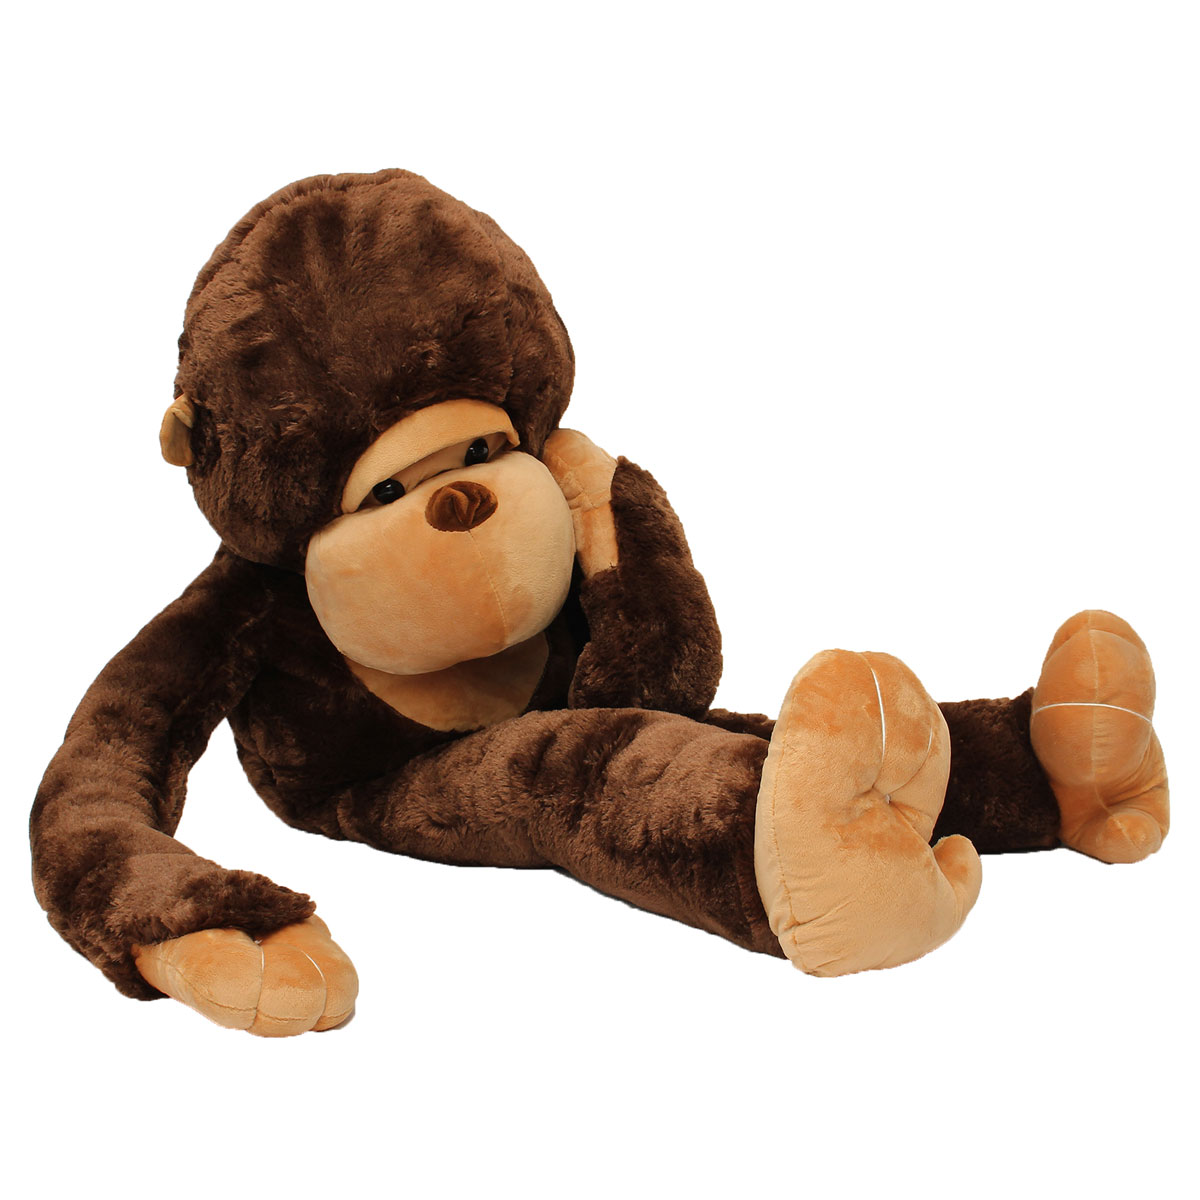 Giant Huge Large Big Stuffed Animal Plush Brown Monkey Bear Kid's Doll Toy gifts